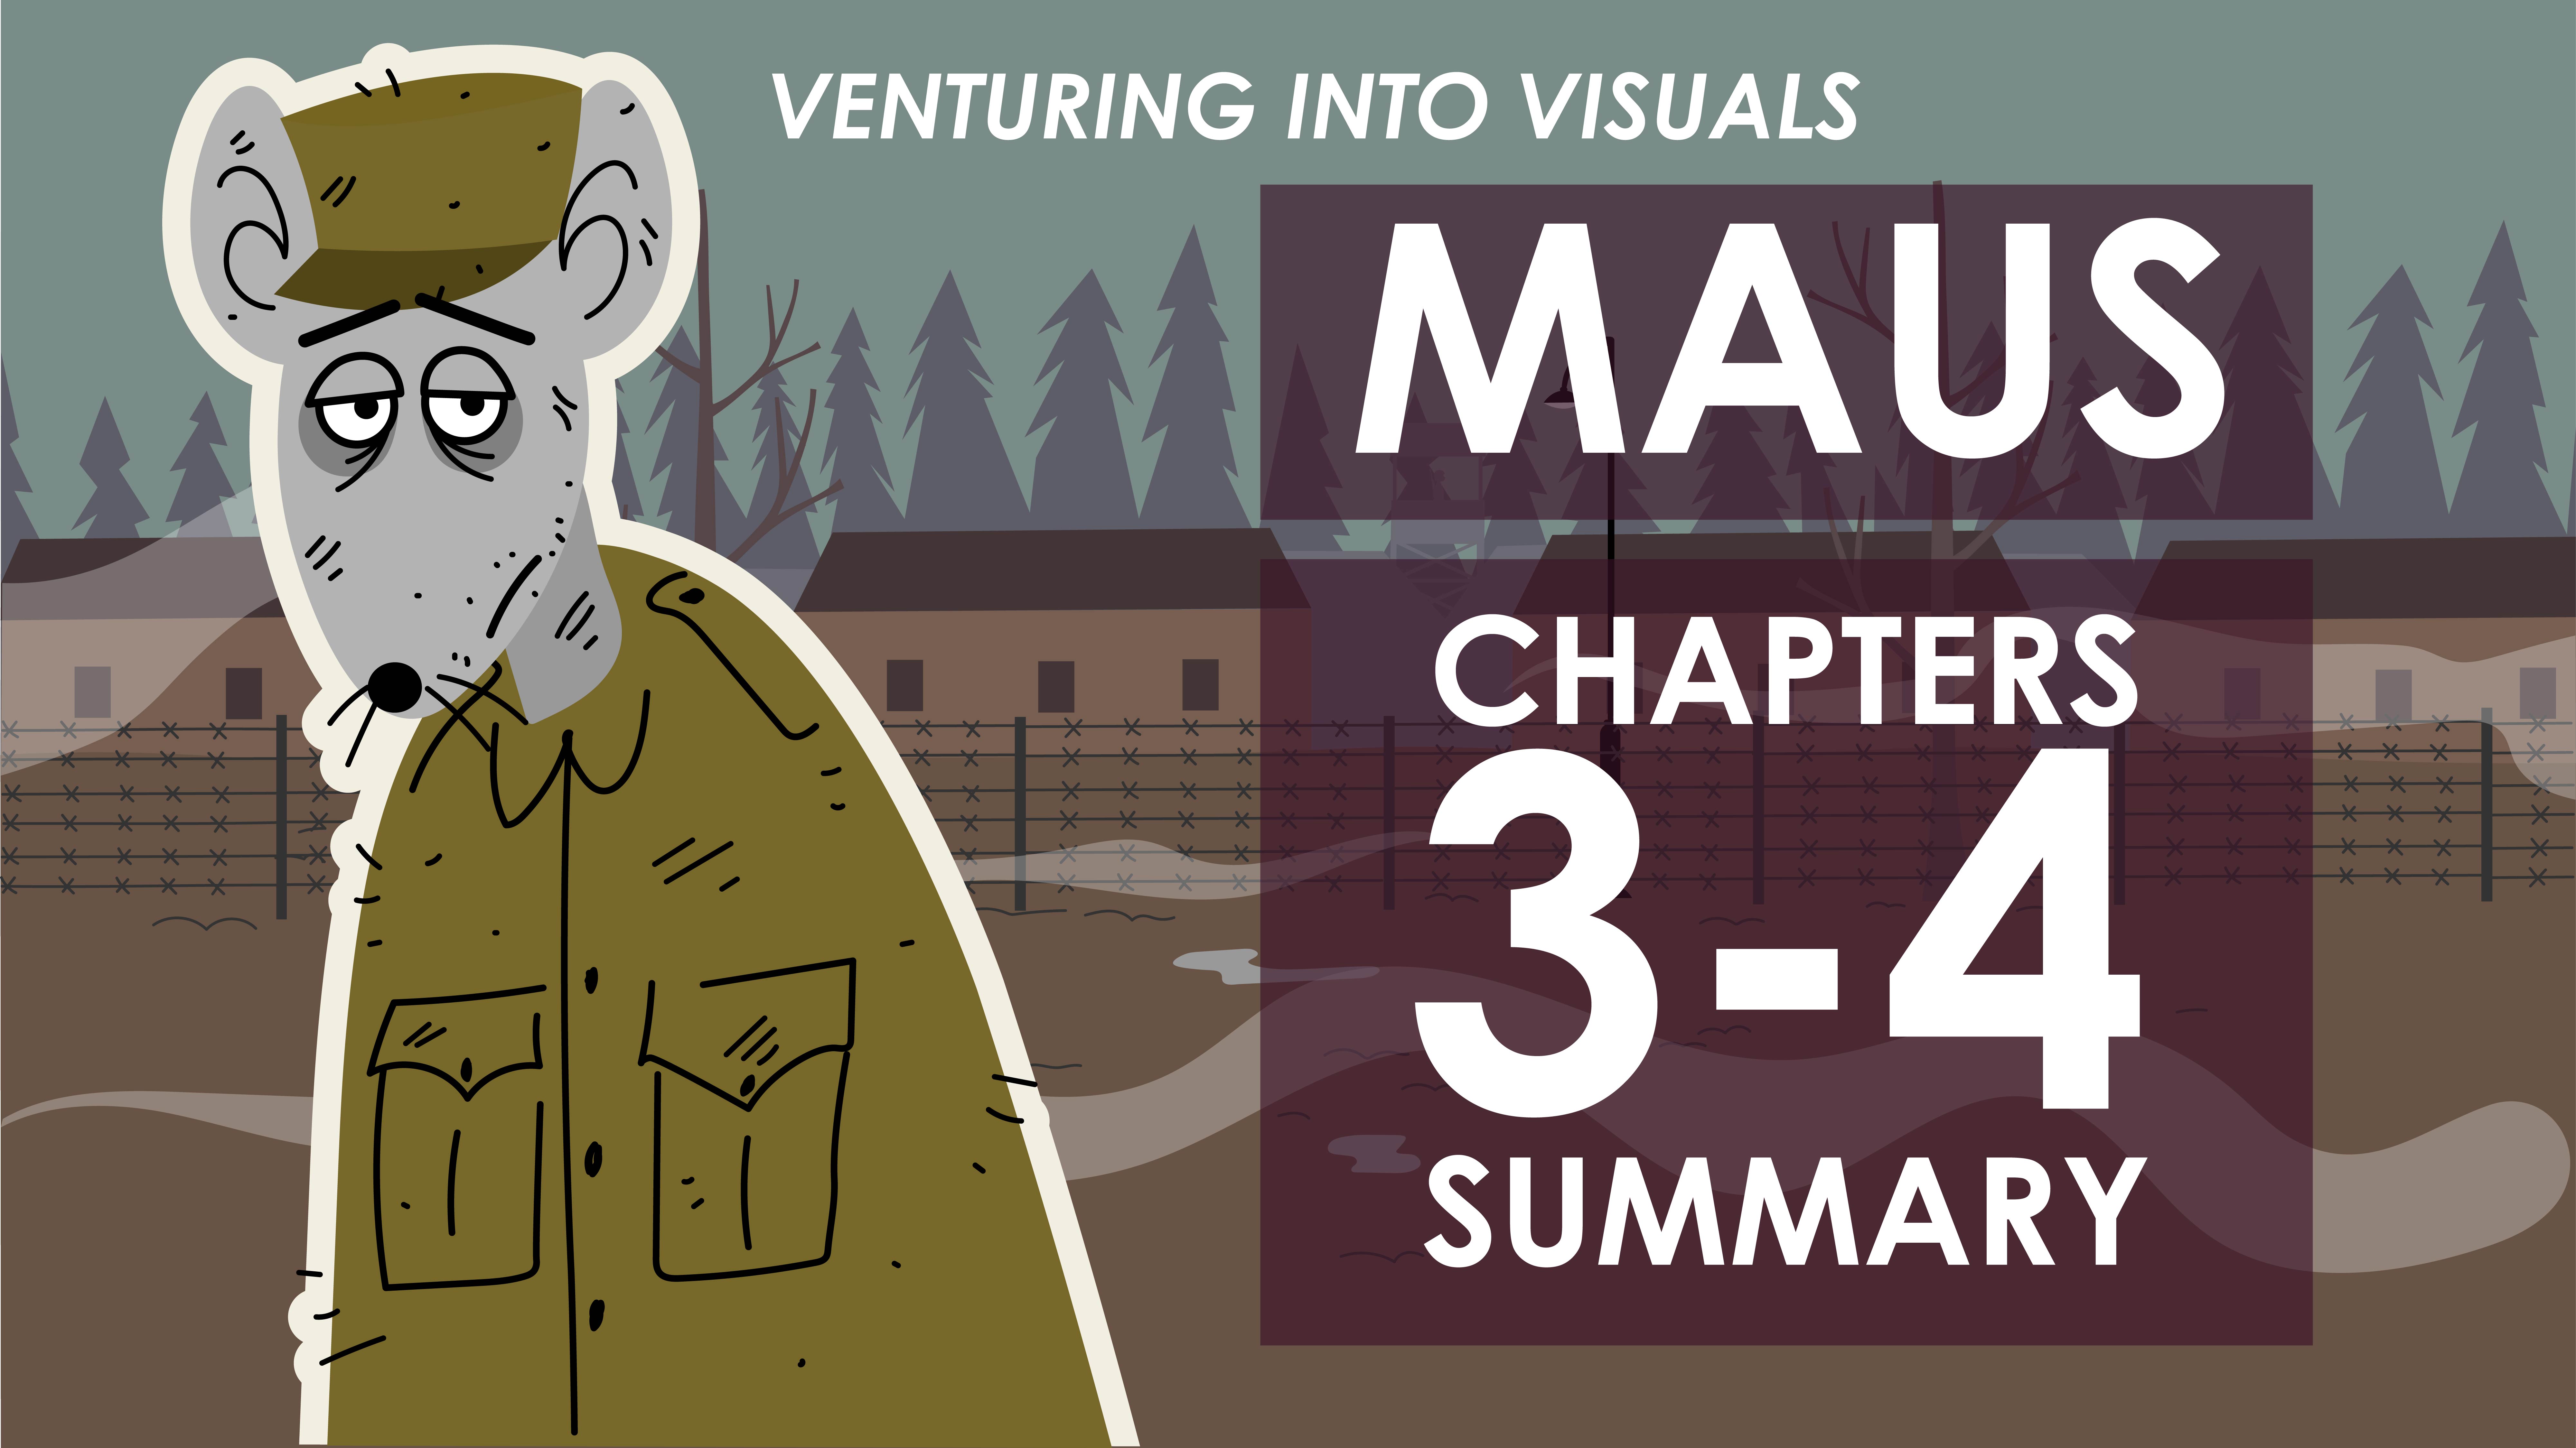 Maus - Art Spiegelman - Volume 1, Chapters 3-4 Summary - Venturing Into Visuals Series